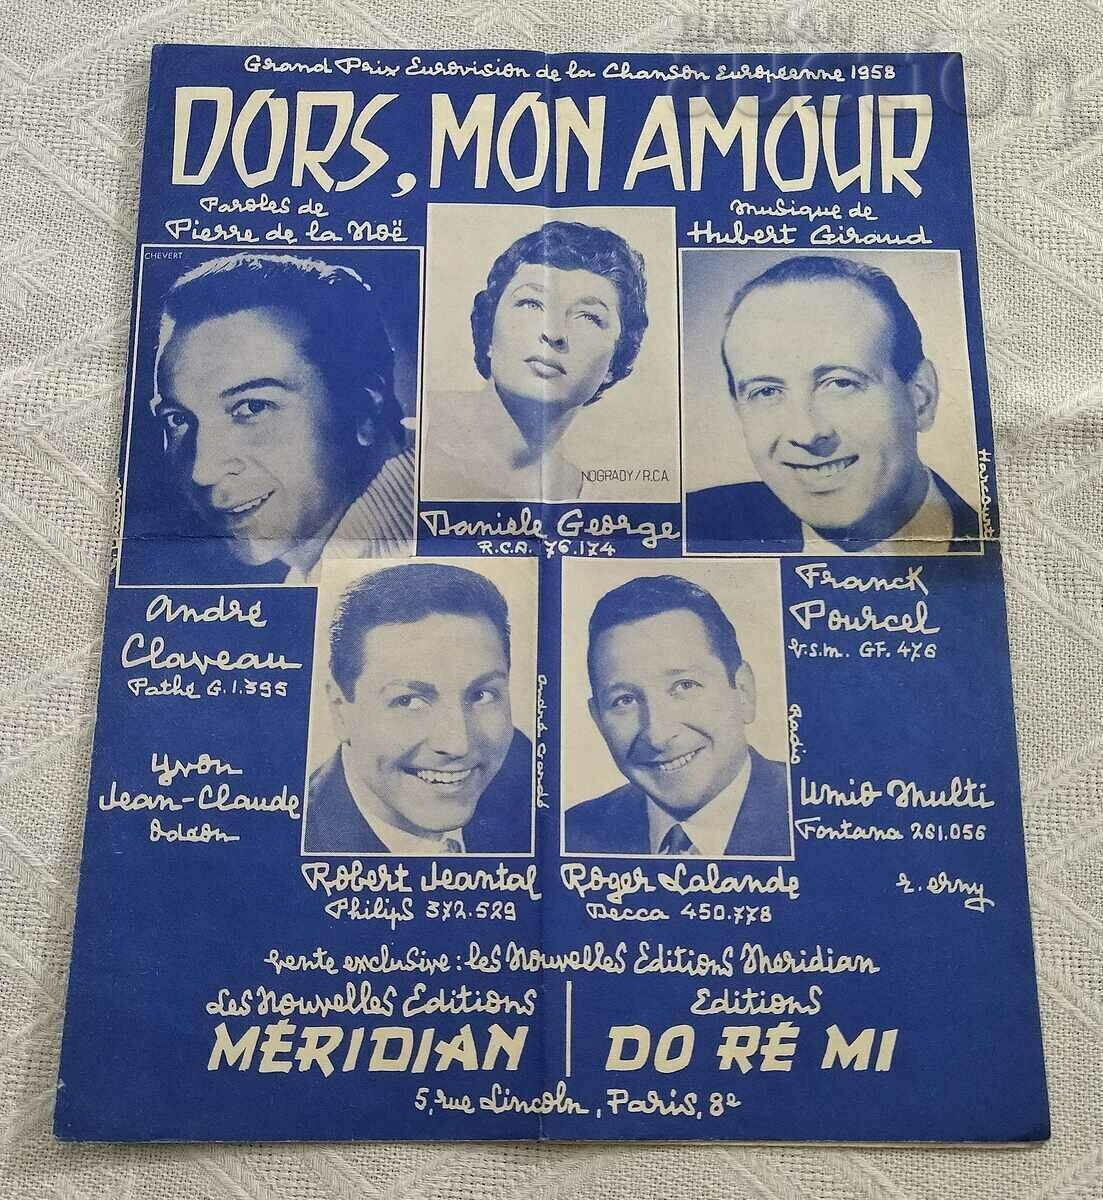 VALS „DORS, MON AMOUR” NOTE 1958